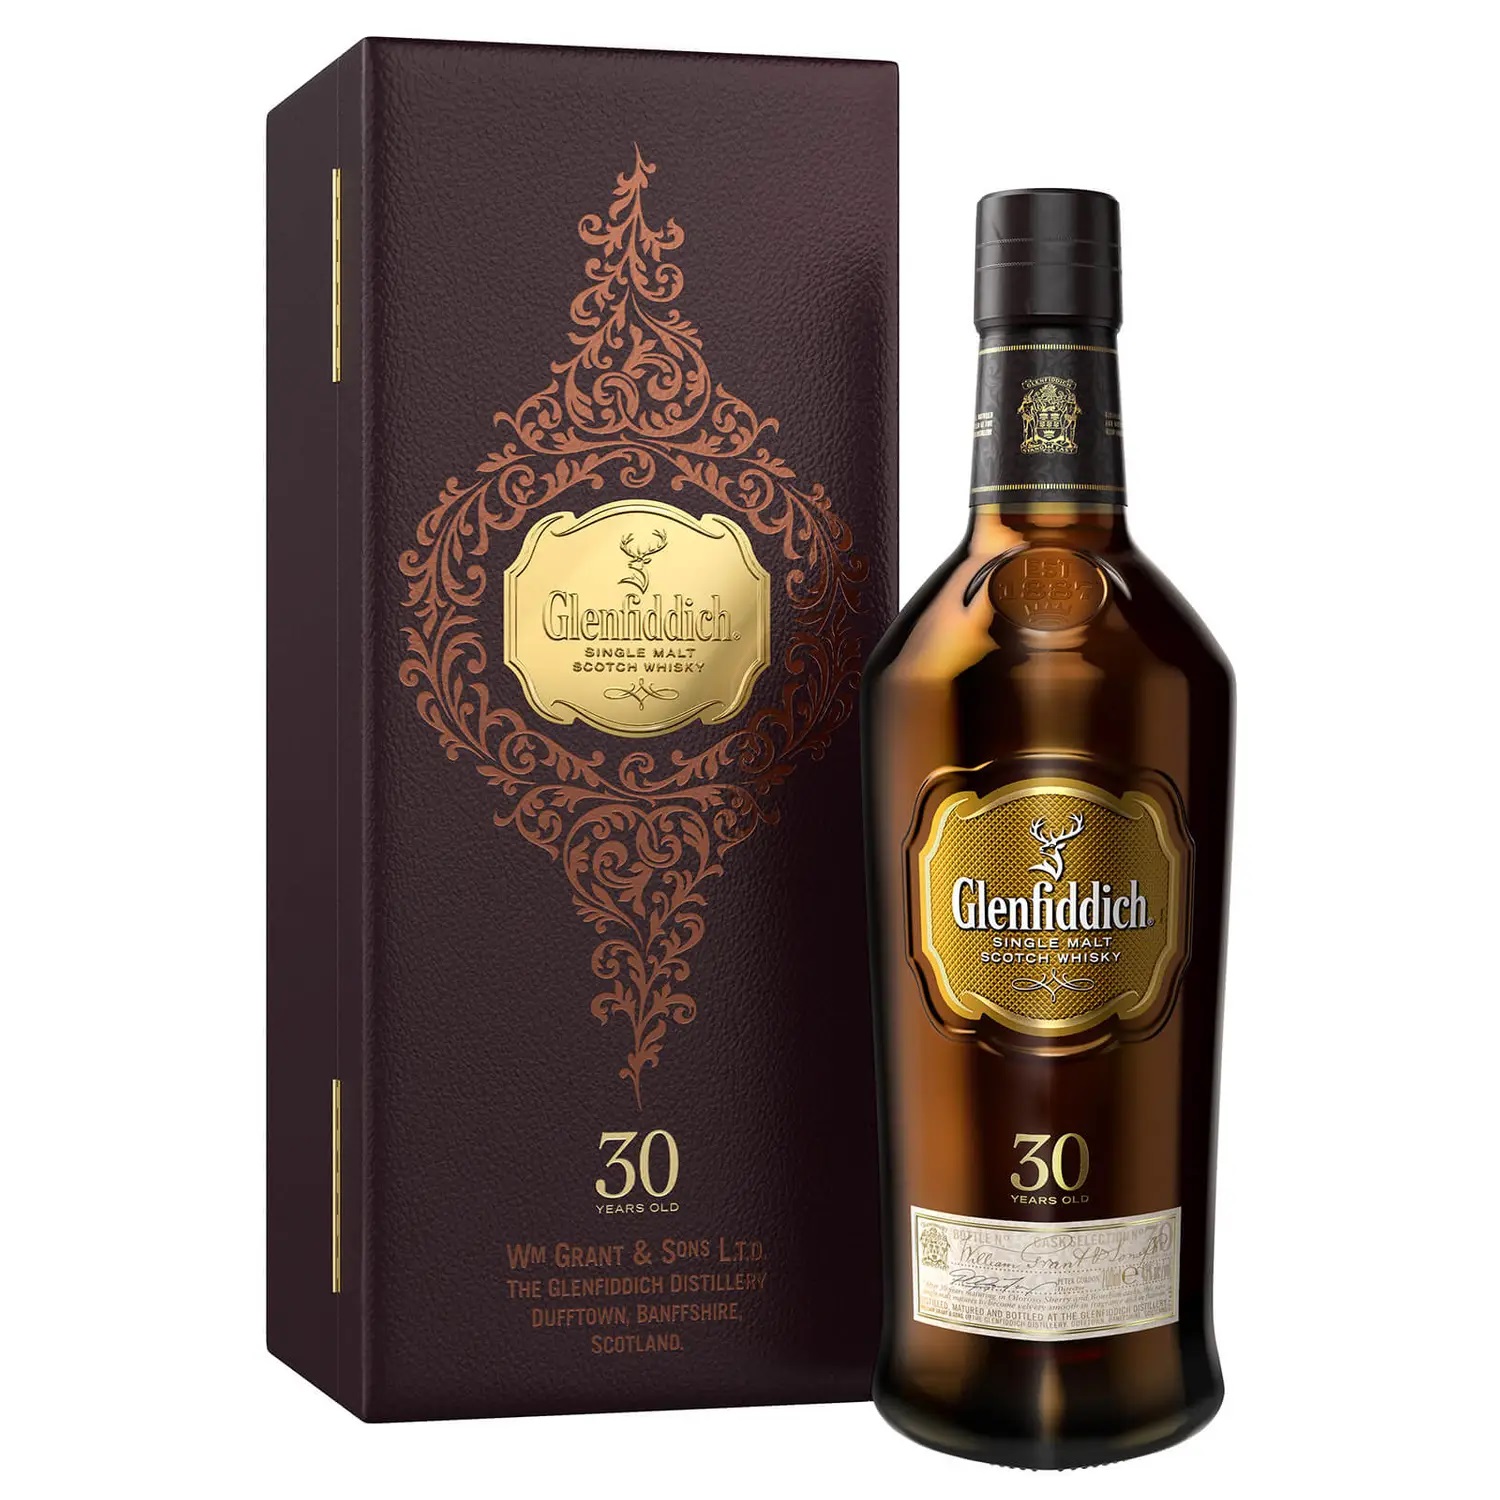 Glenfiddich 30 Year Old Single Malt Scotch Whisky 70cl